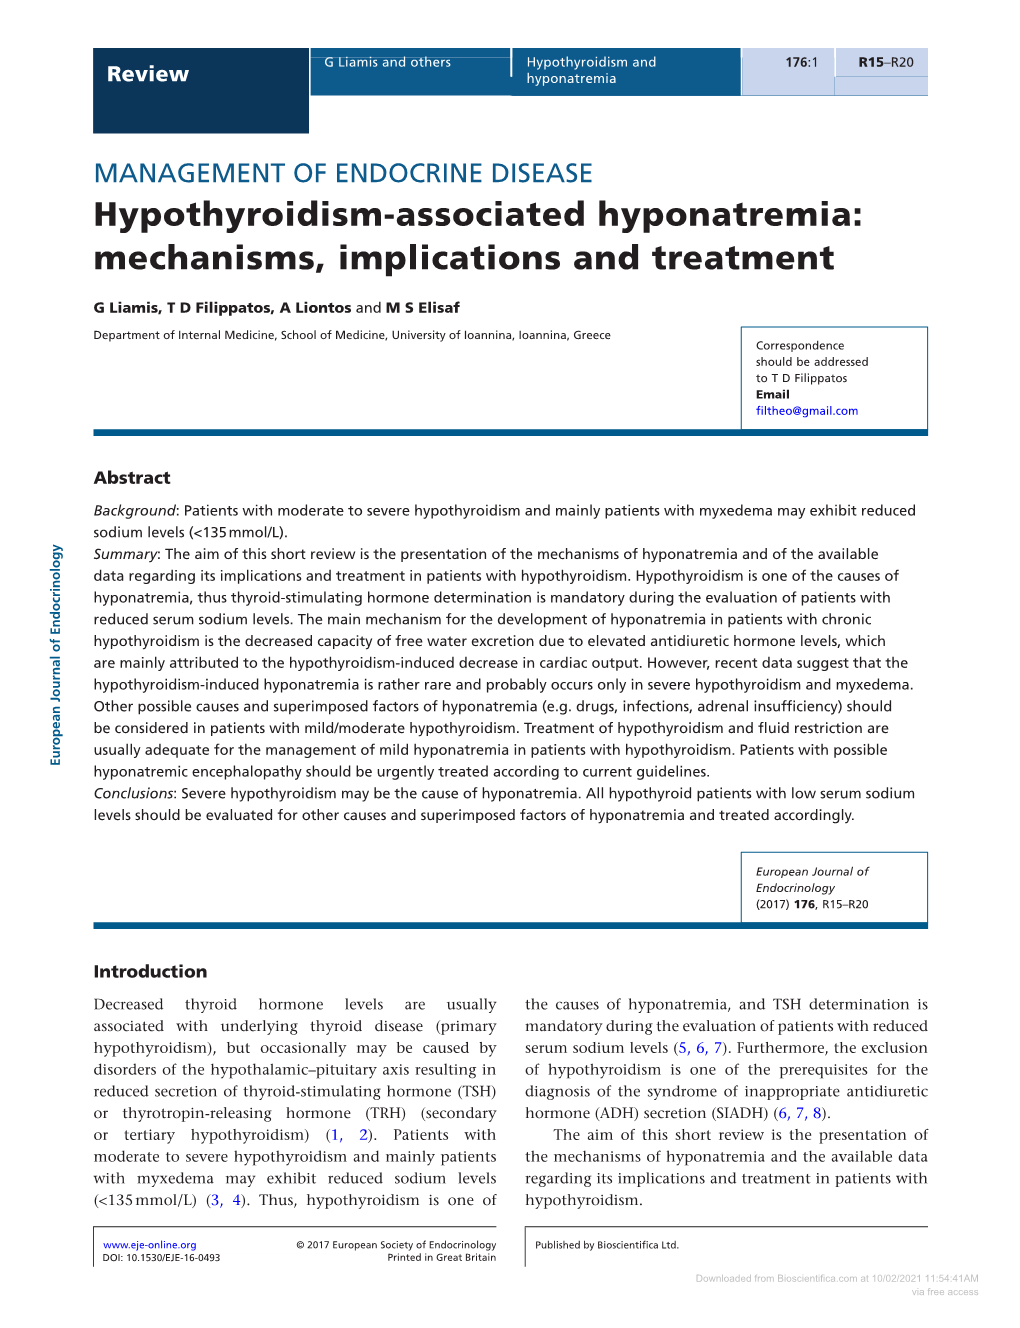 Hypothyroidism-Associated Hyponatremia: MANAGEMENT OFENDOCRINEDISEASE DOI: 10.1530/EJE-16-0493 Review